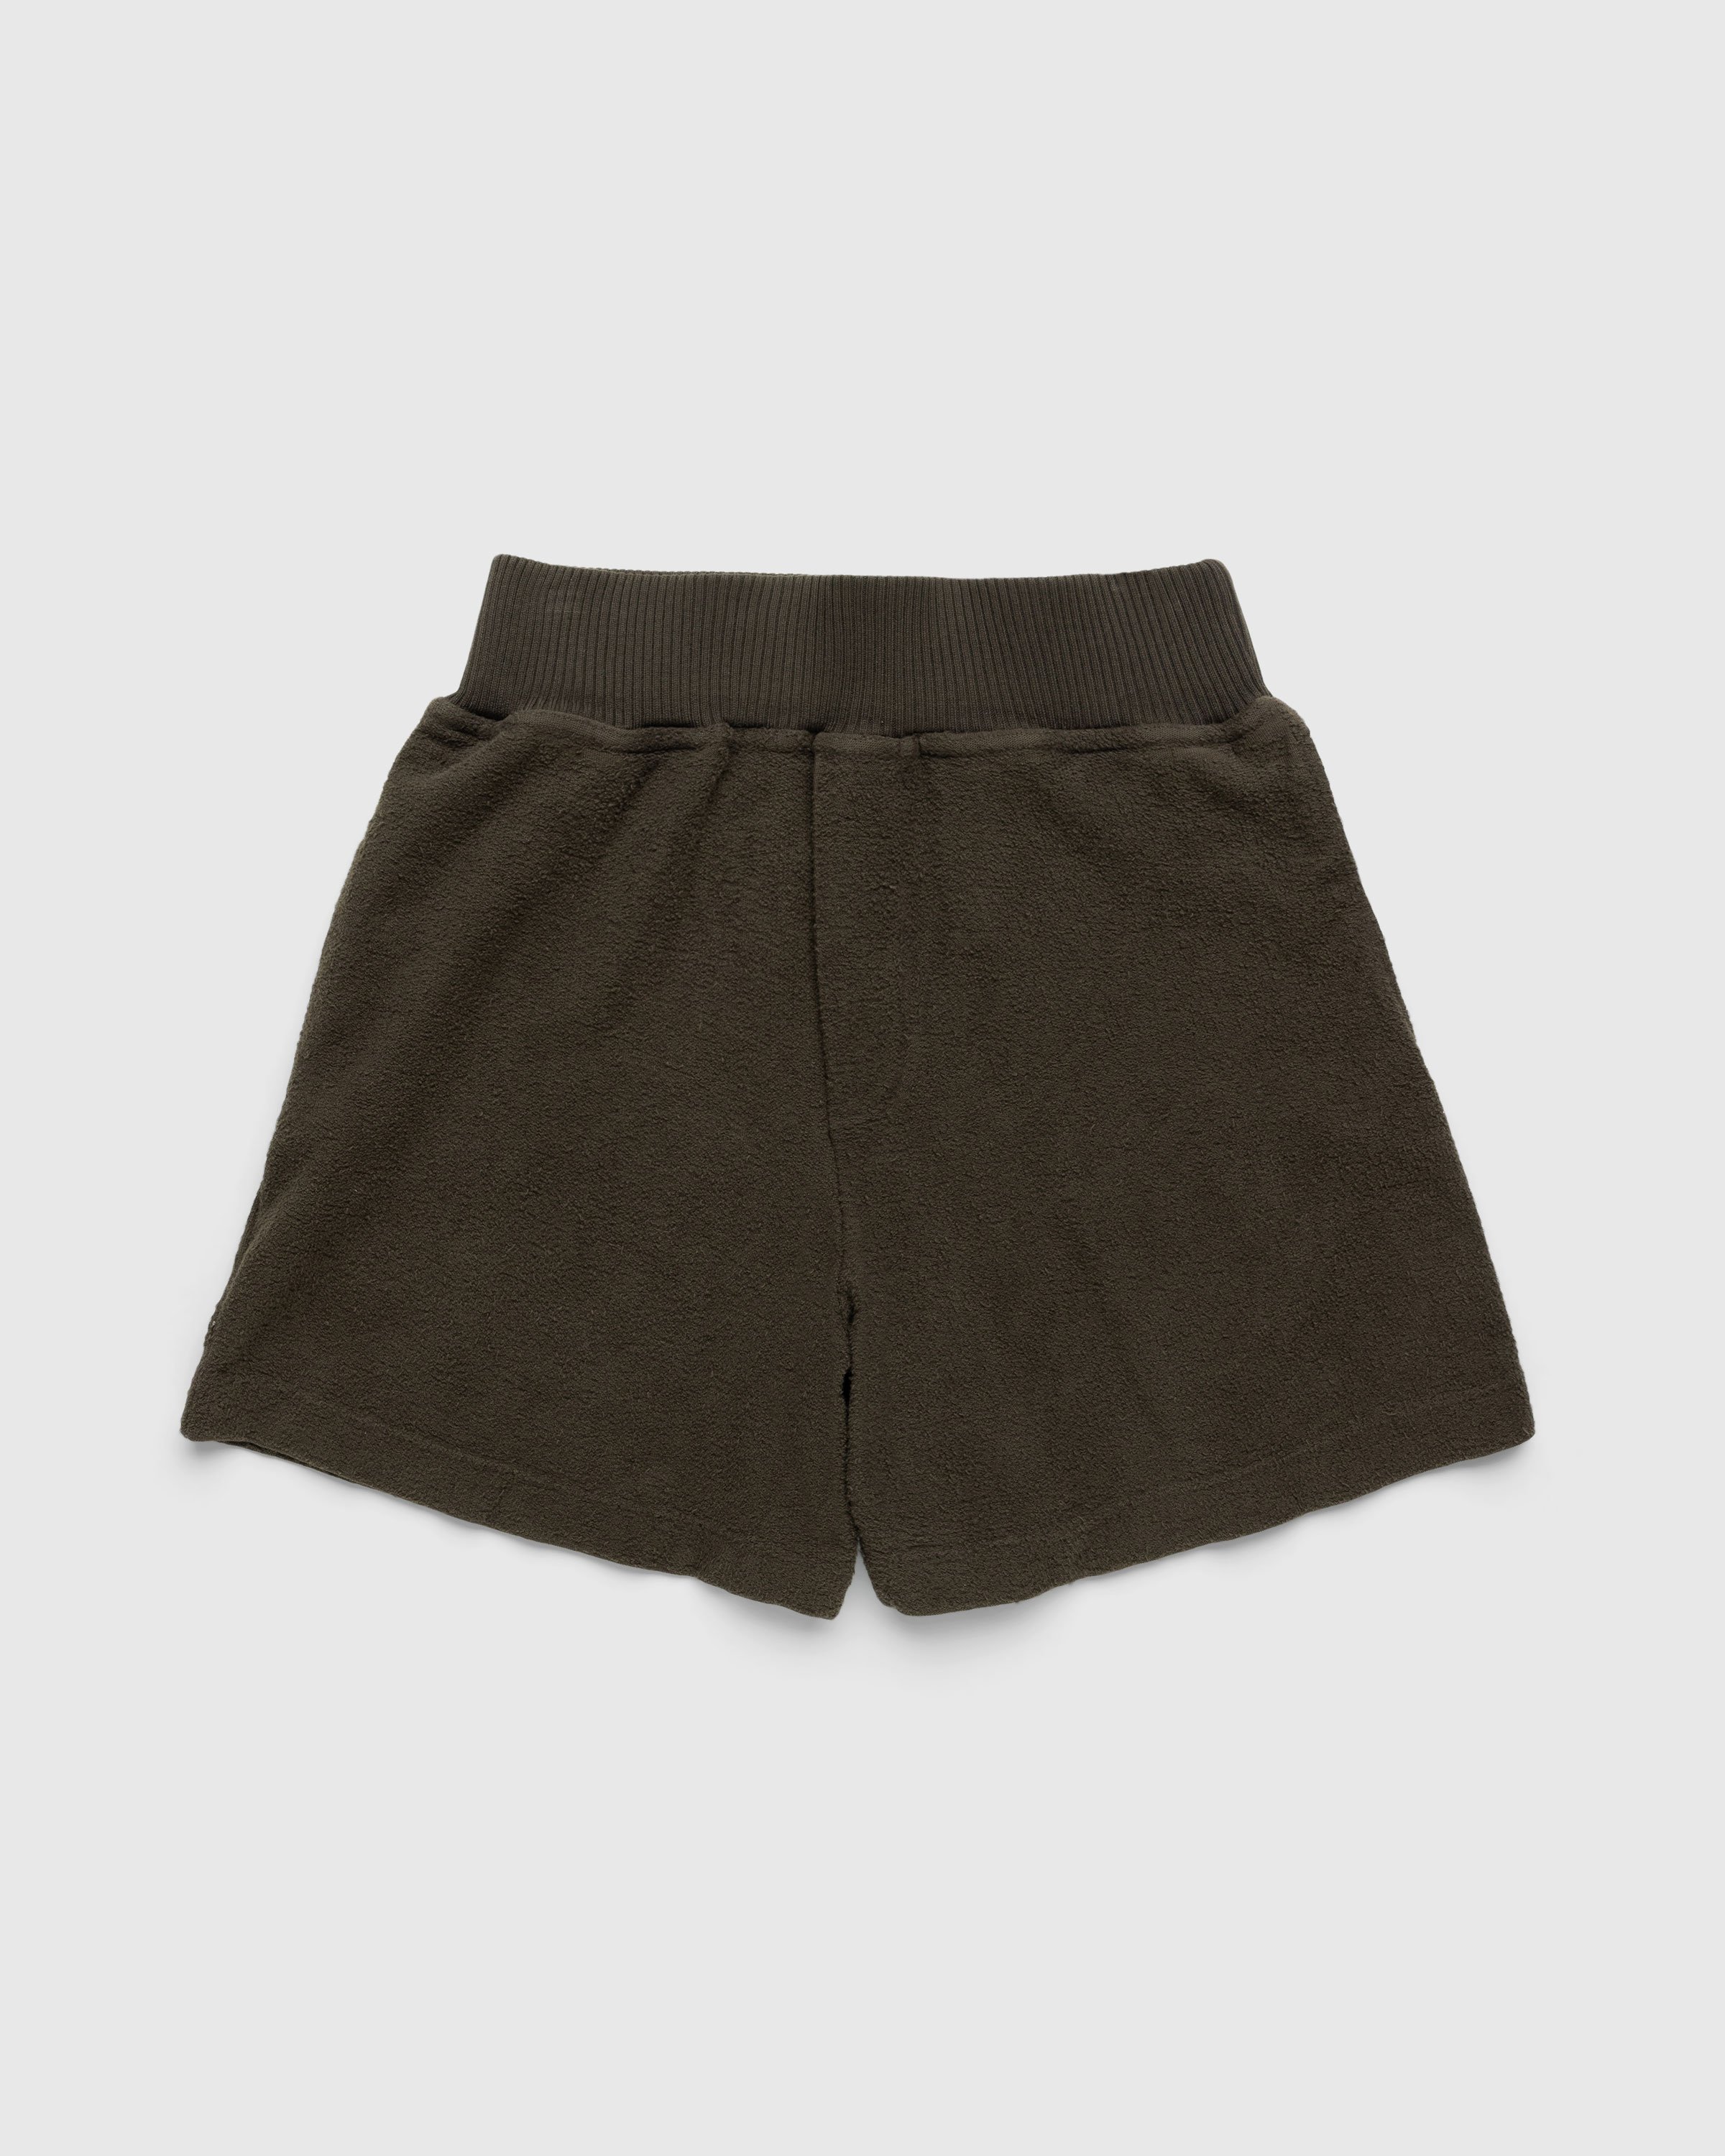 RANRA - Flogo Shorts Chocolate - Clothing - Brown - Image 1